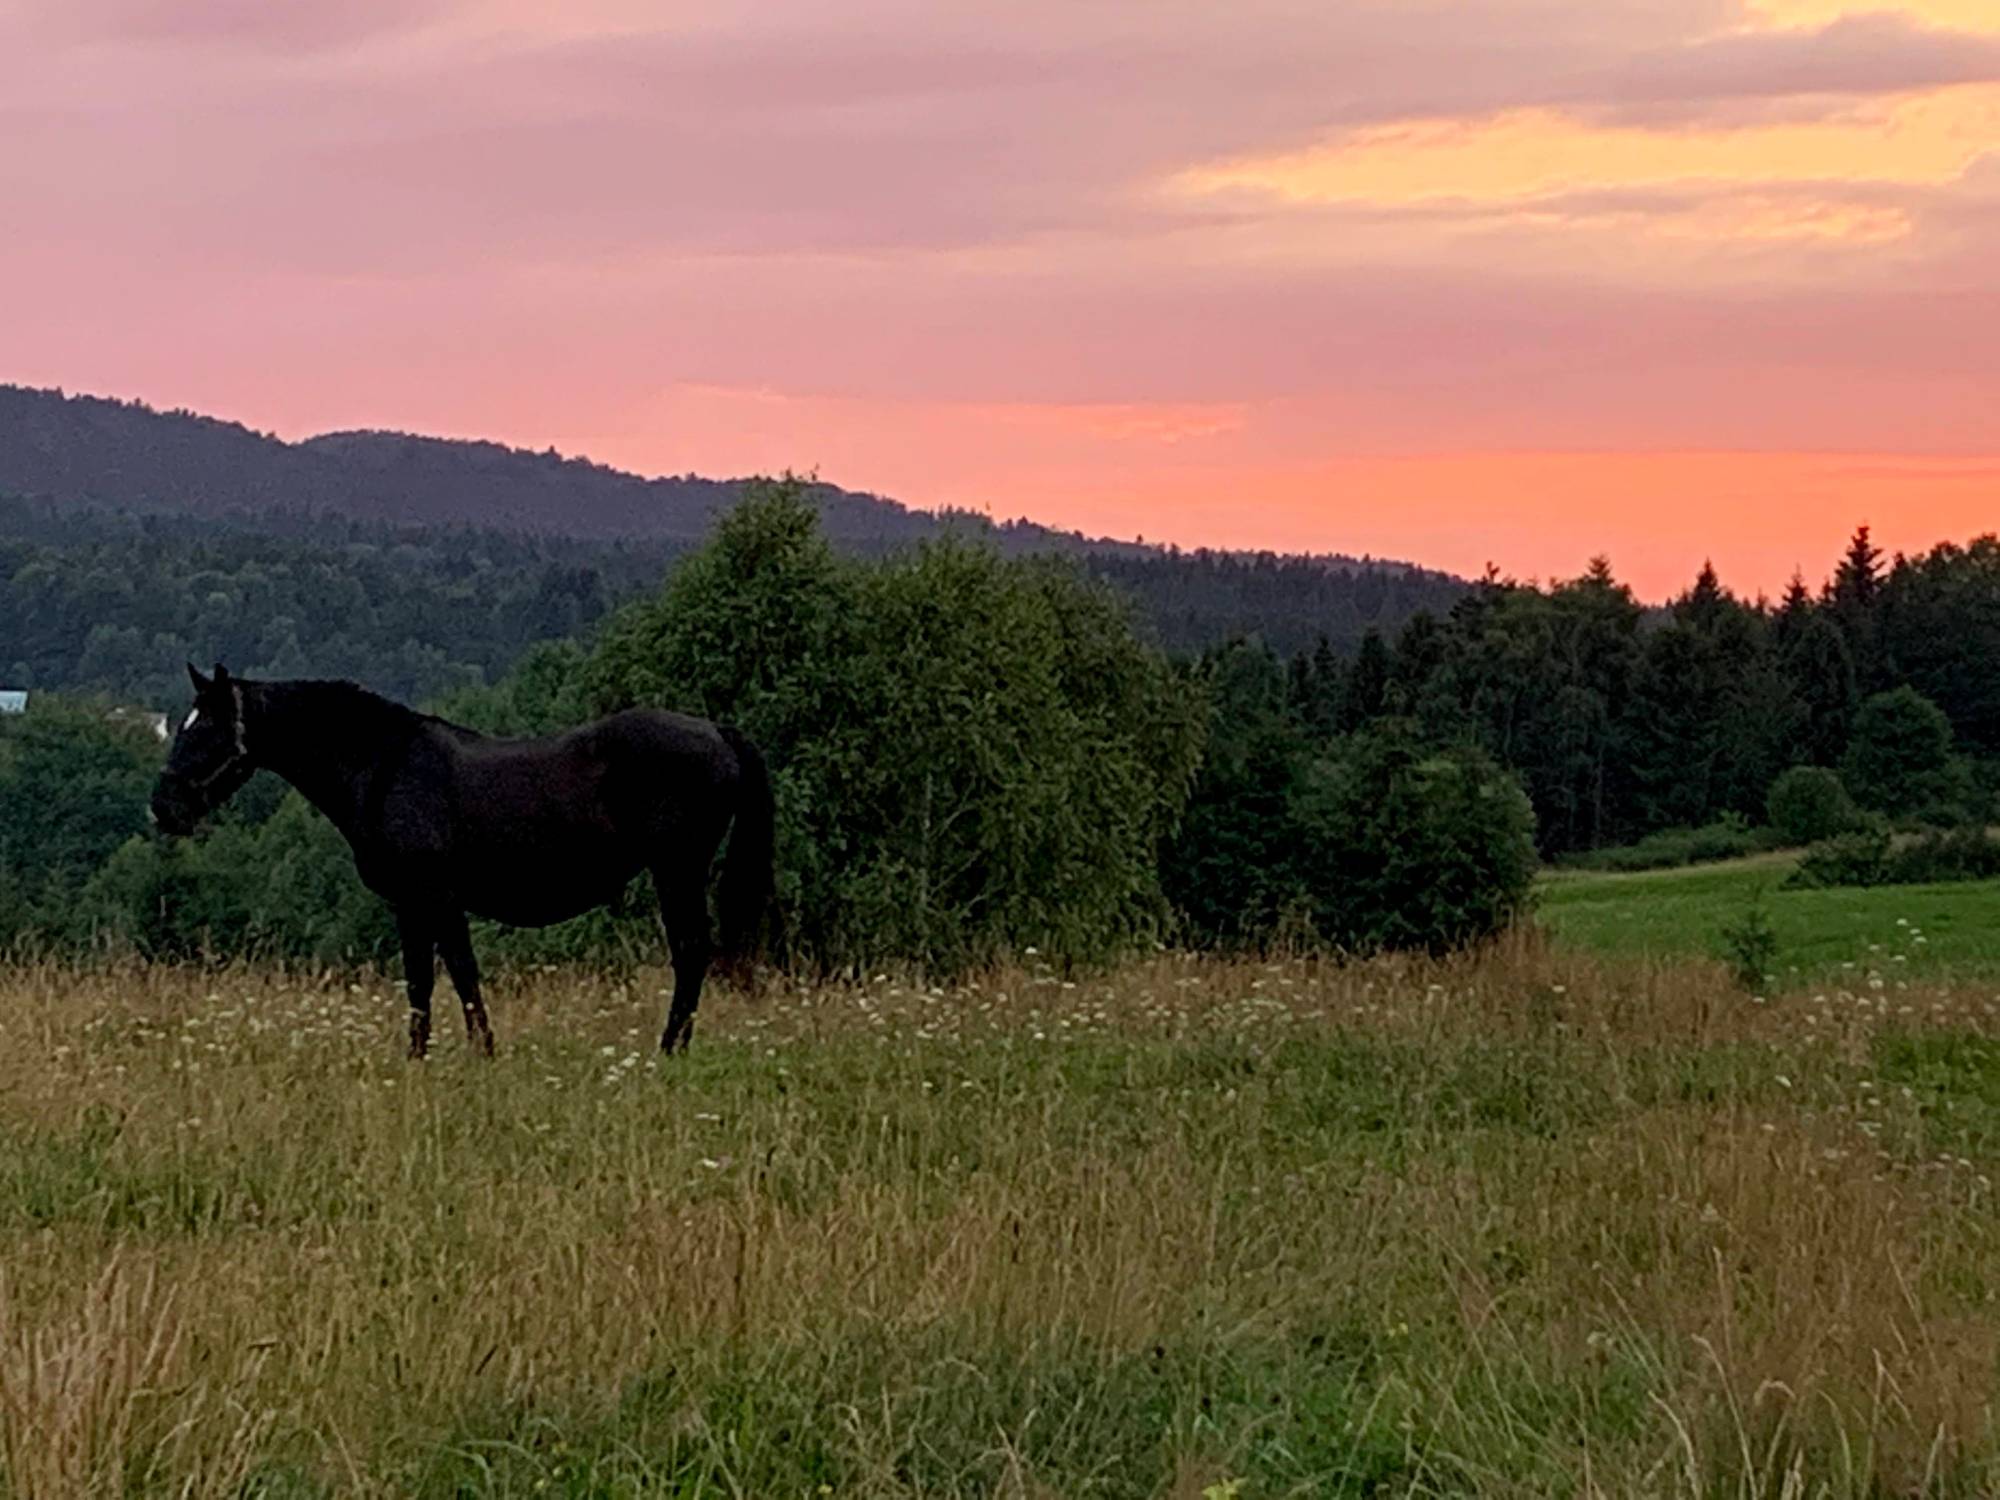 #AroundTheWorld - A black horse on pasture by sunset, Poland (Bieszczady Mts)